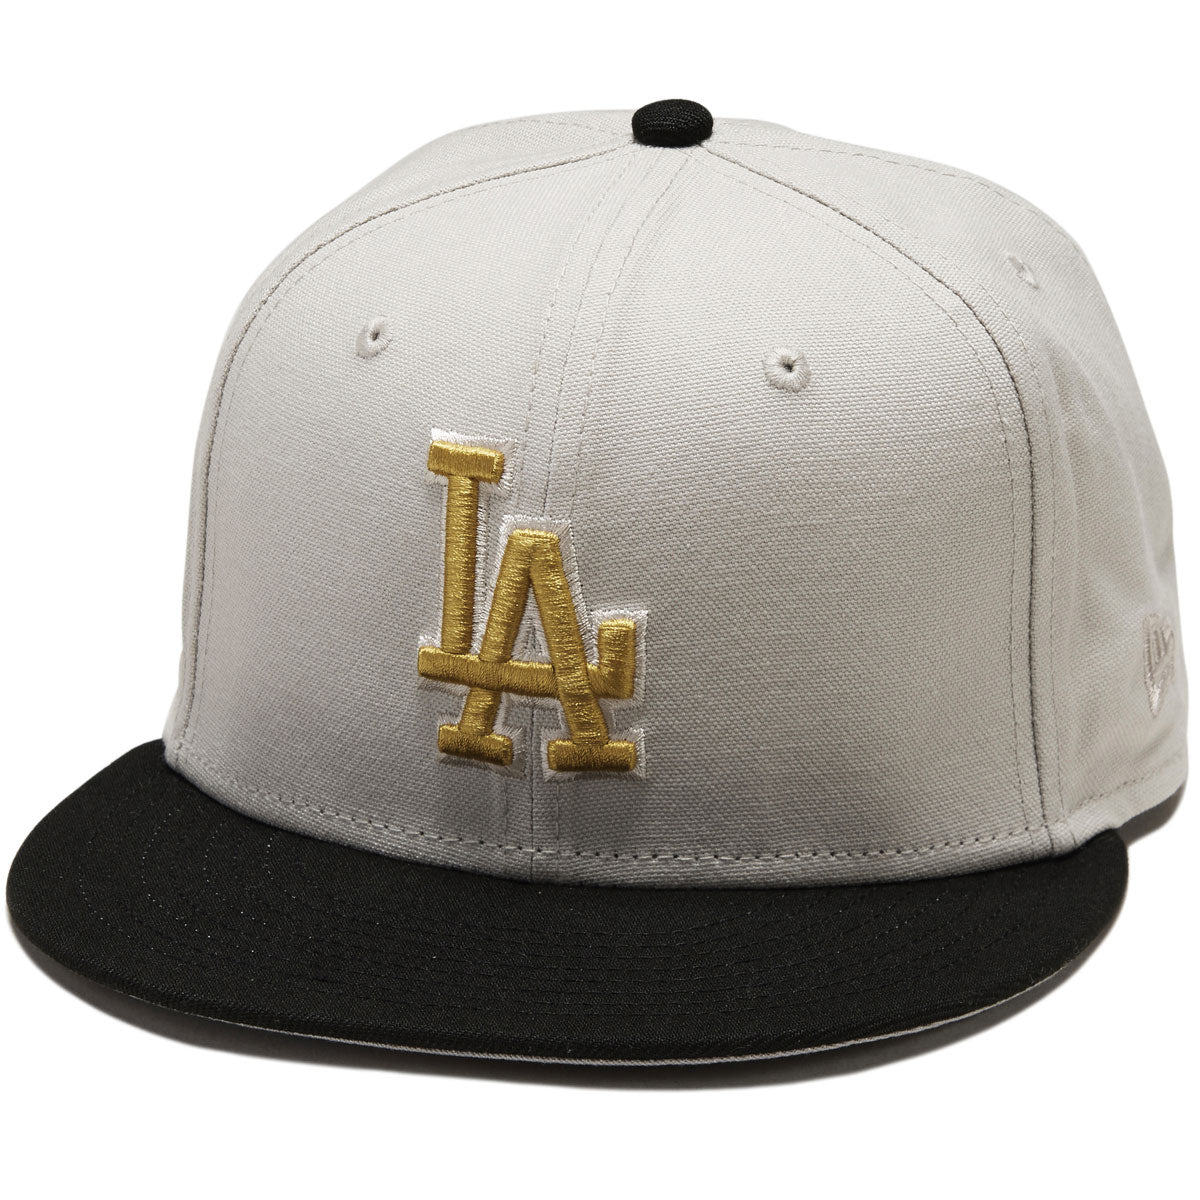 New Era 5950 Two-tone Stone Hat - Los Angeles Dodgers image 1